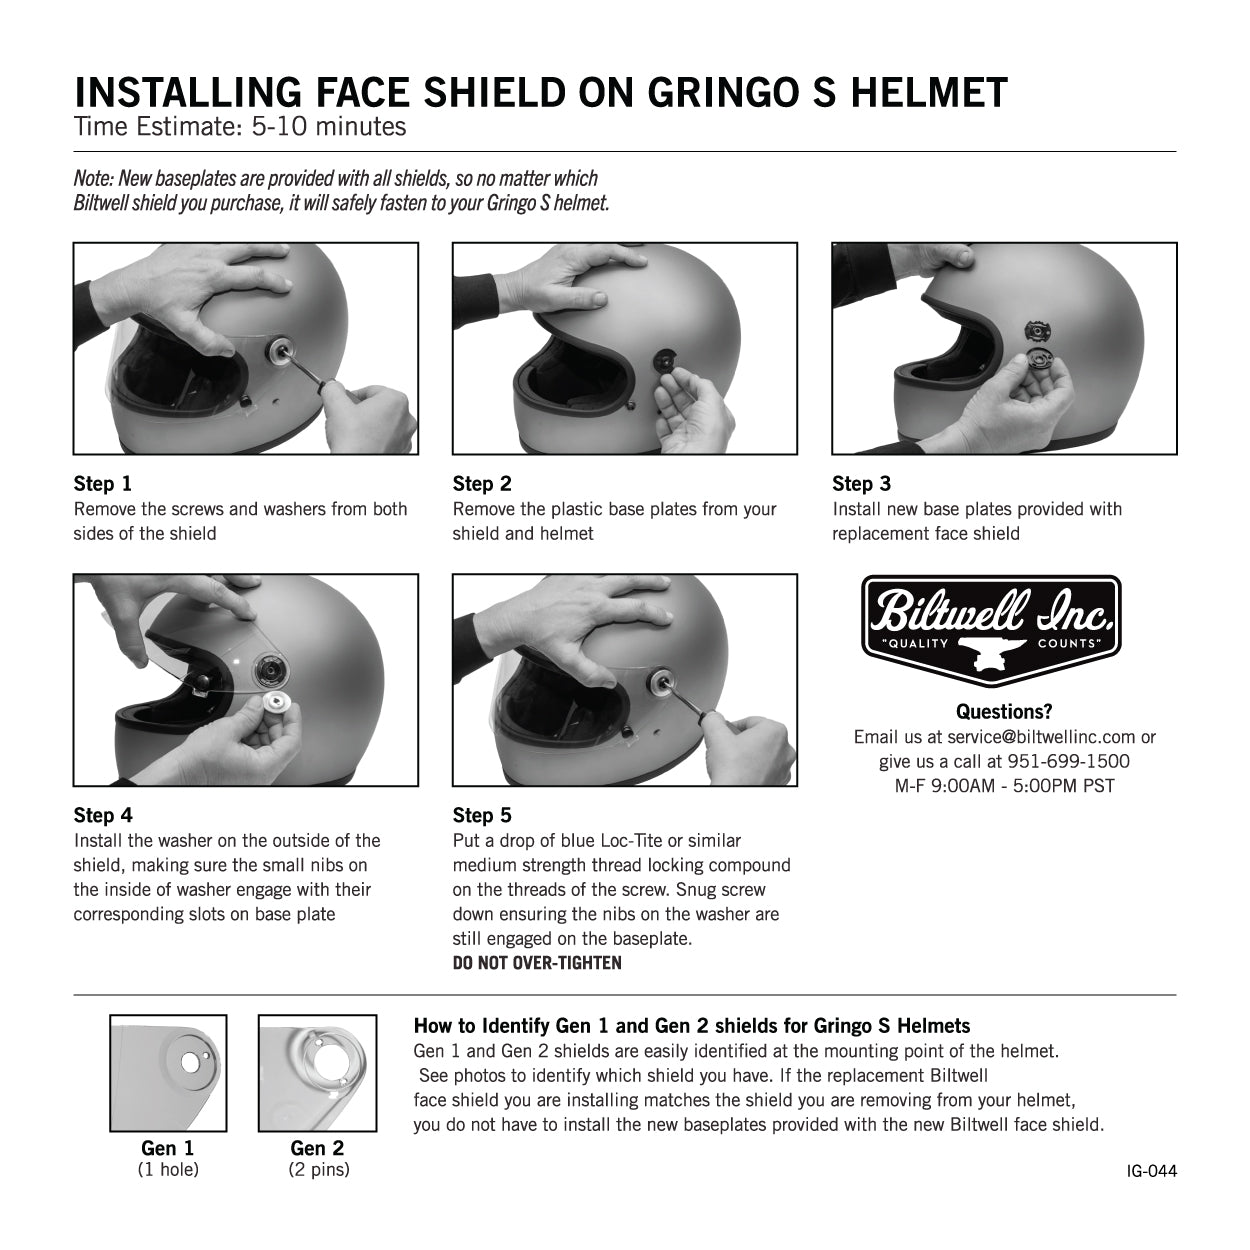 CLOSEOUT Gringo S ECE R22.05 Helmet - Gloss Black